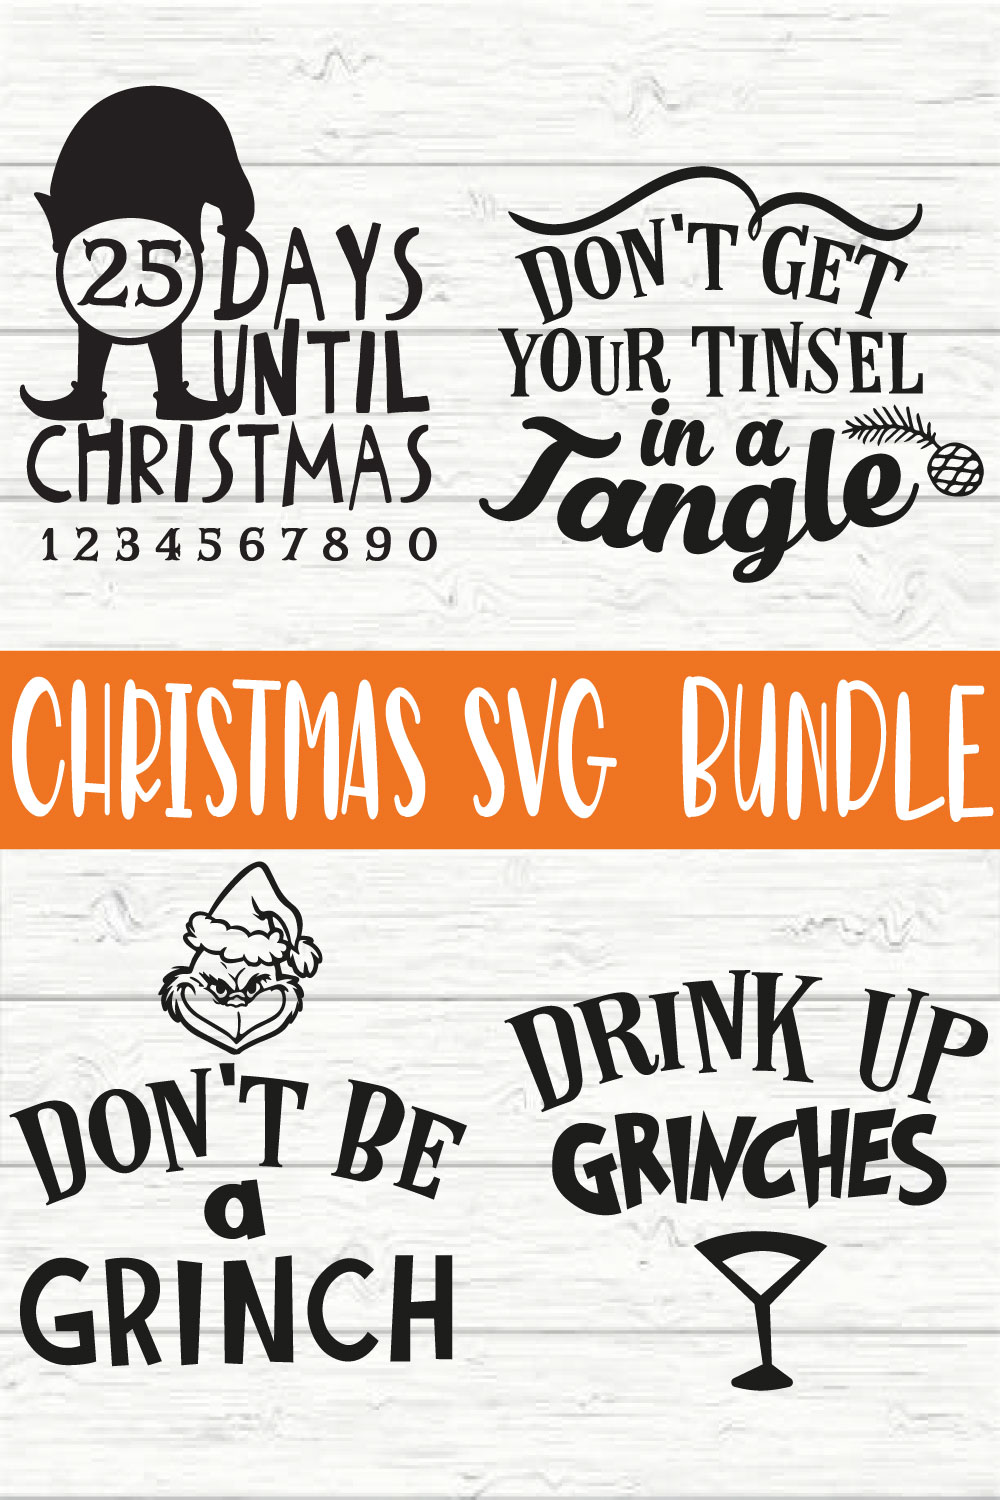 Christmas Typography Design Bundle vol 9 pinterest preview image.